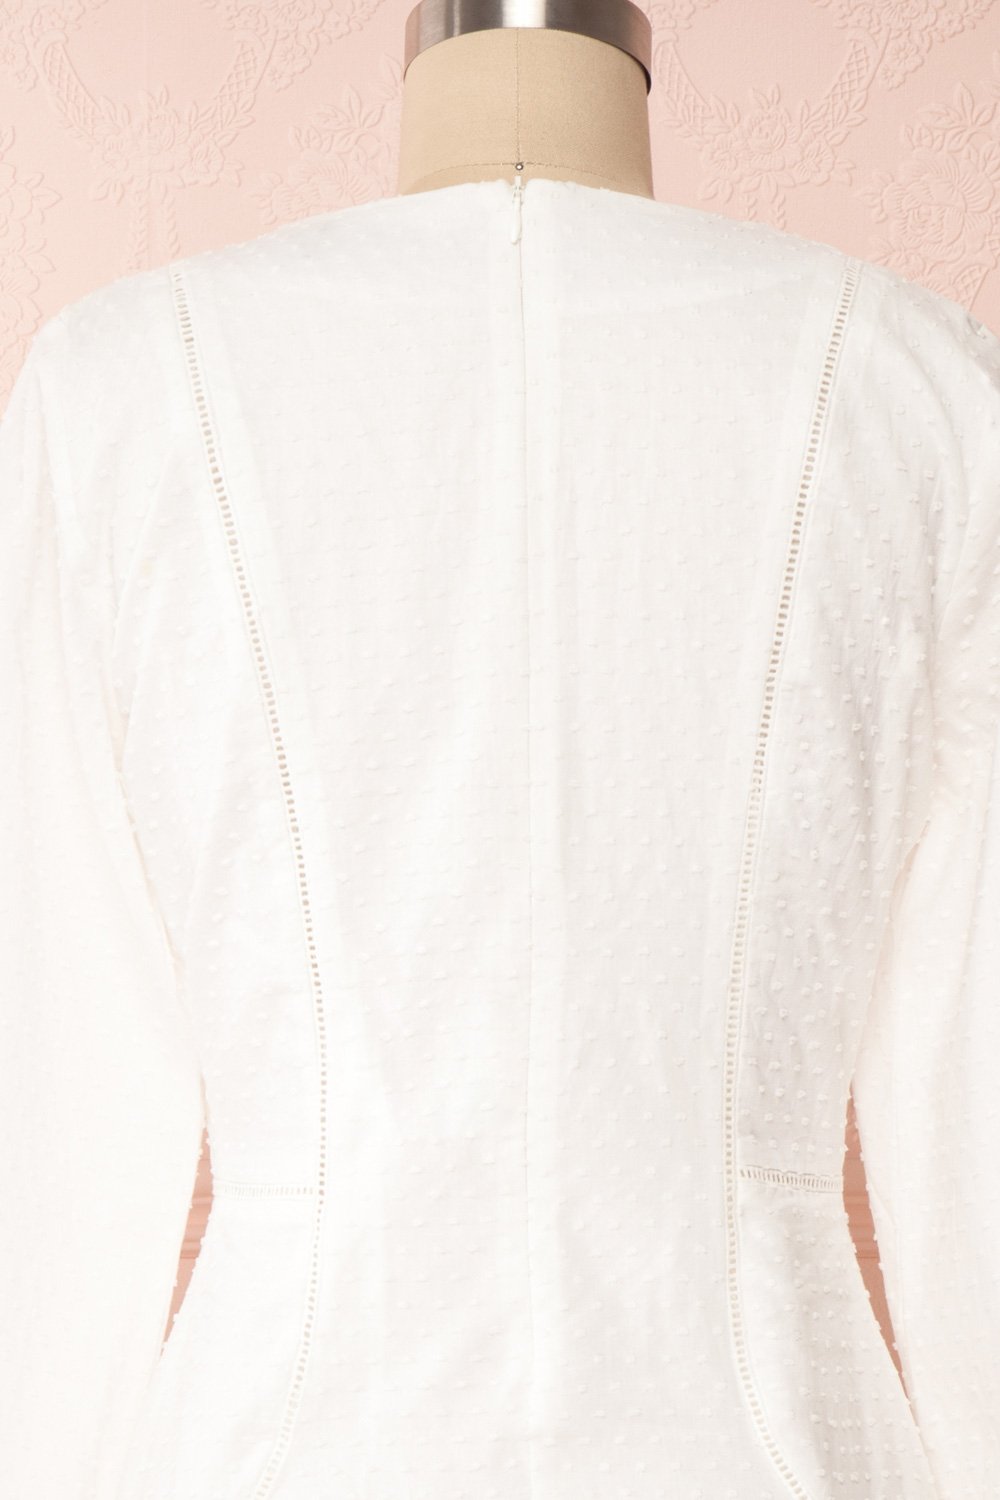 Torborg White Plumetis A-Line Dress back close up | Boutique 1861